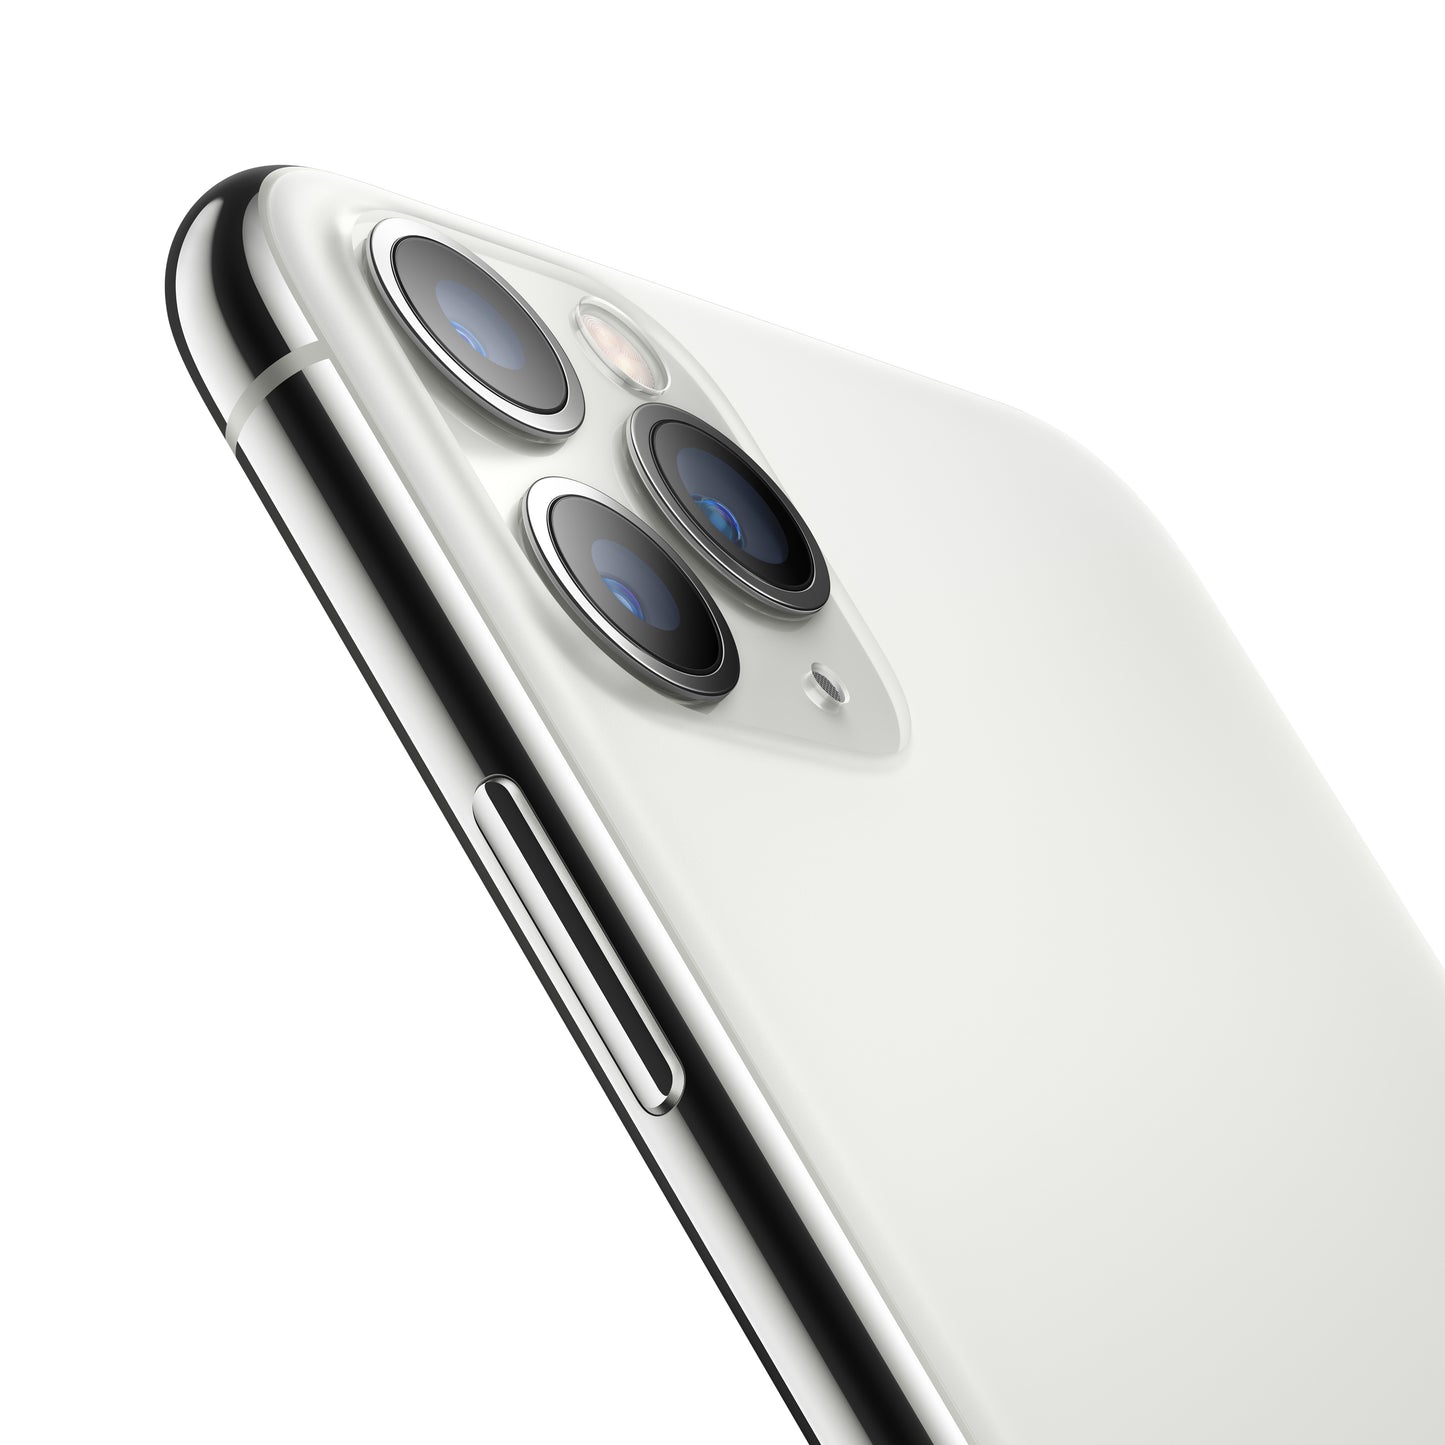 iPhone 11 Pro Max 64GB Silver